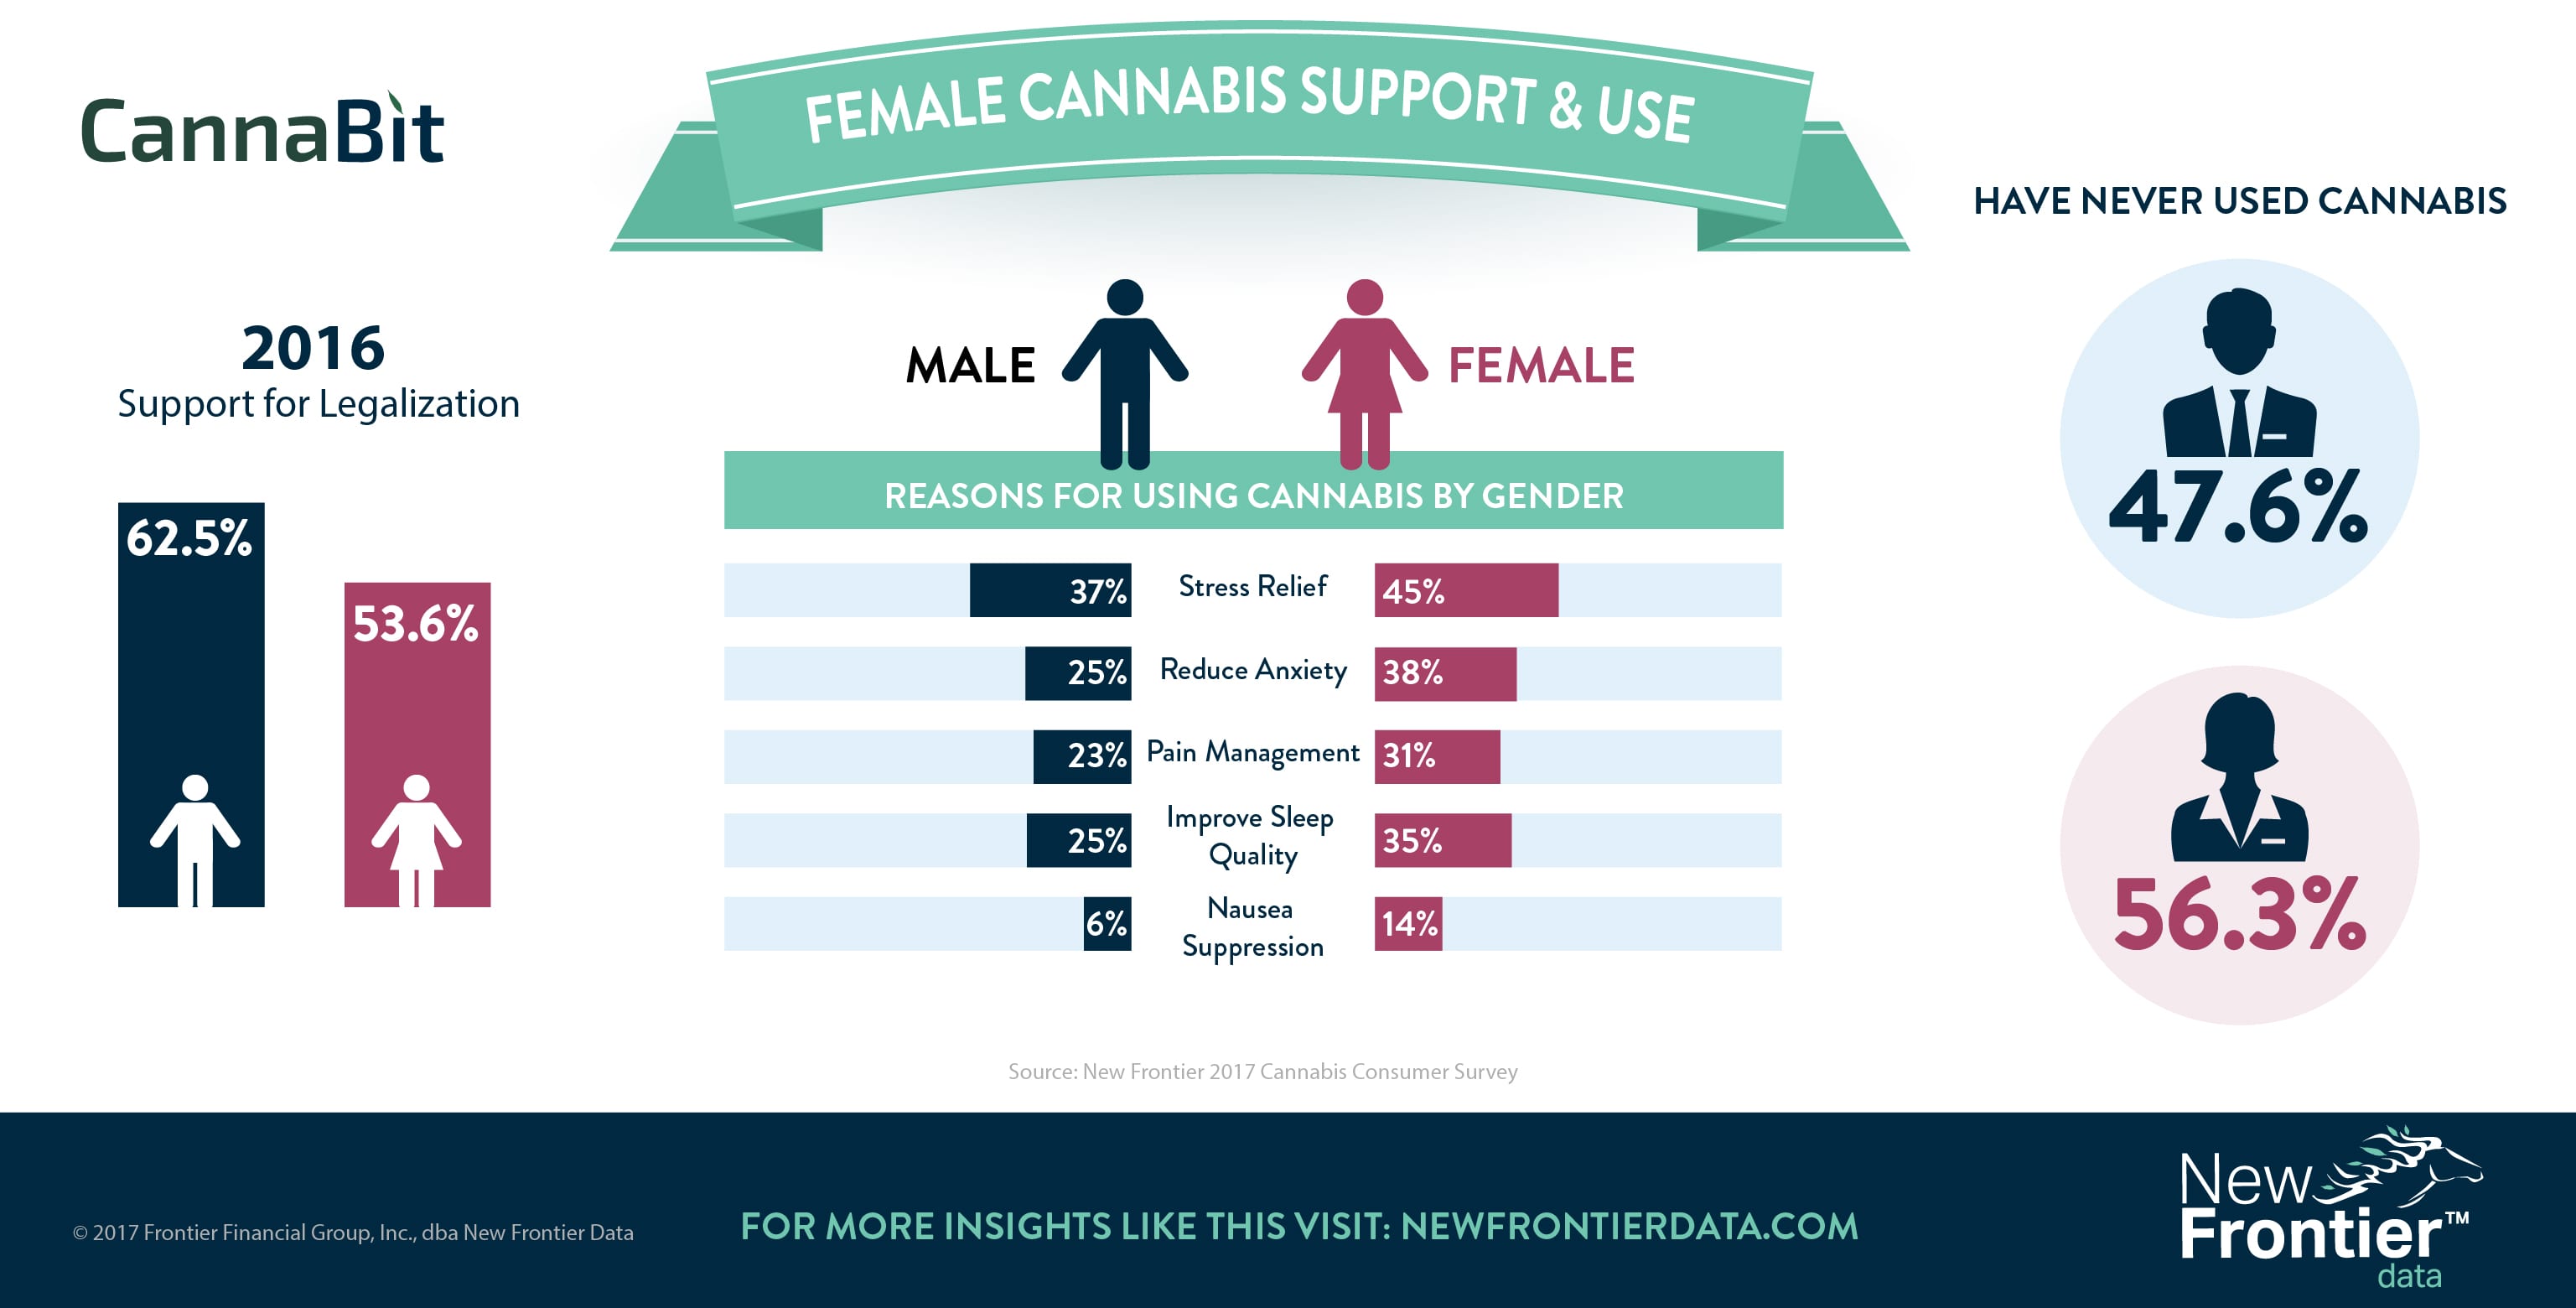 Cannabit: Female Cannabis Support & Use / 08122017